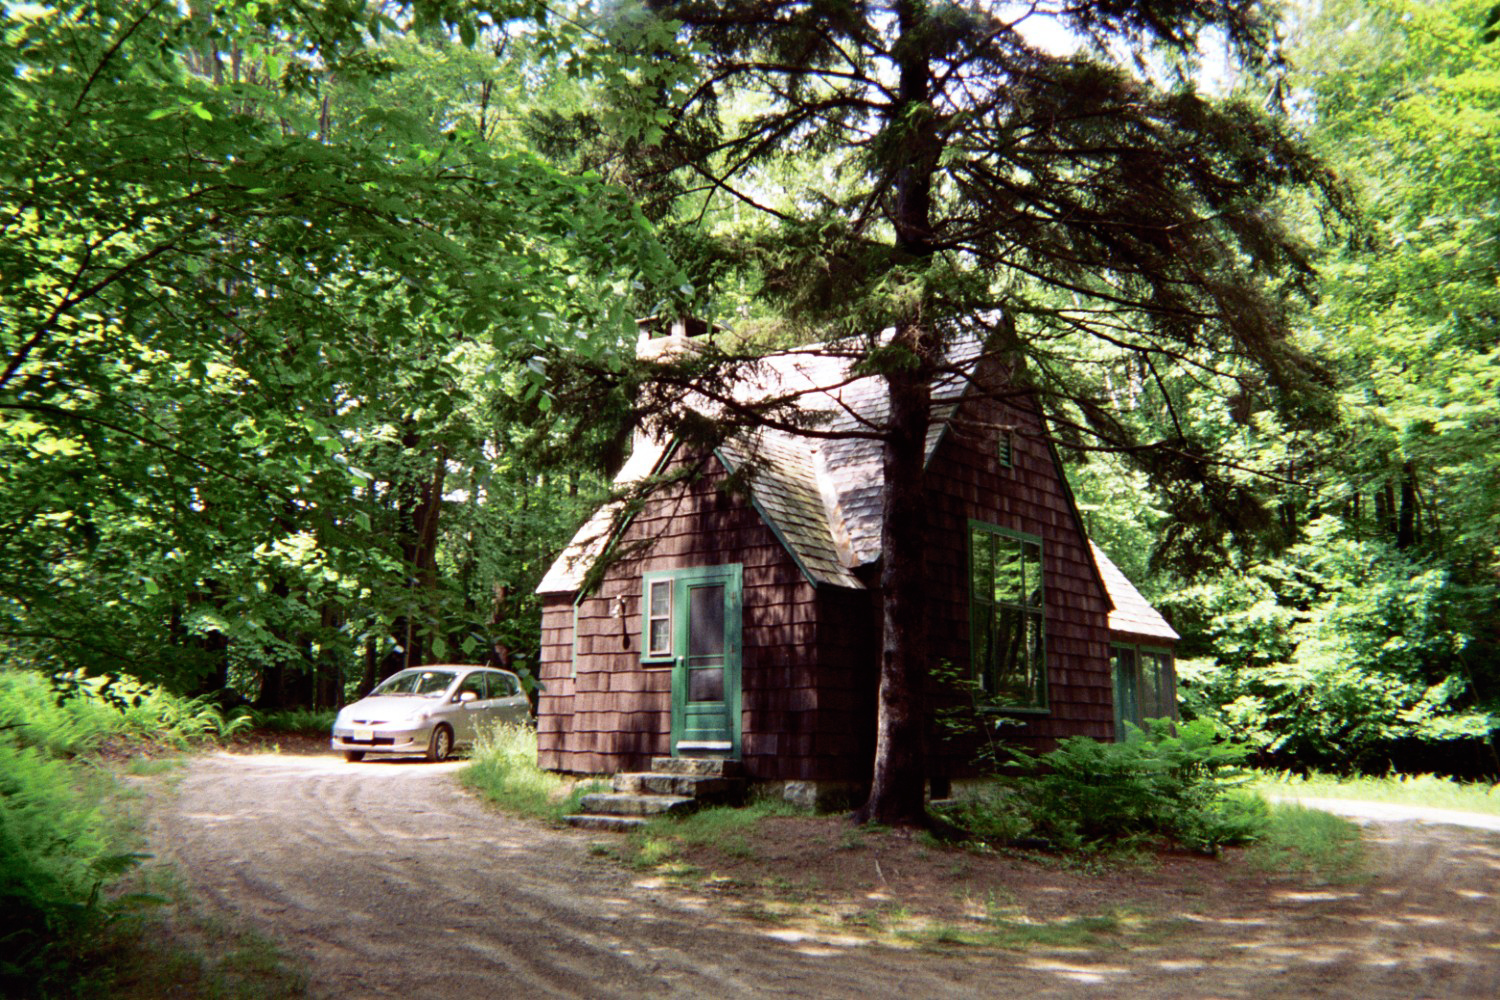 A car approaching a wooden cabin